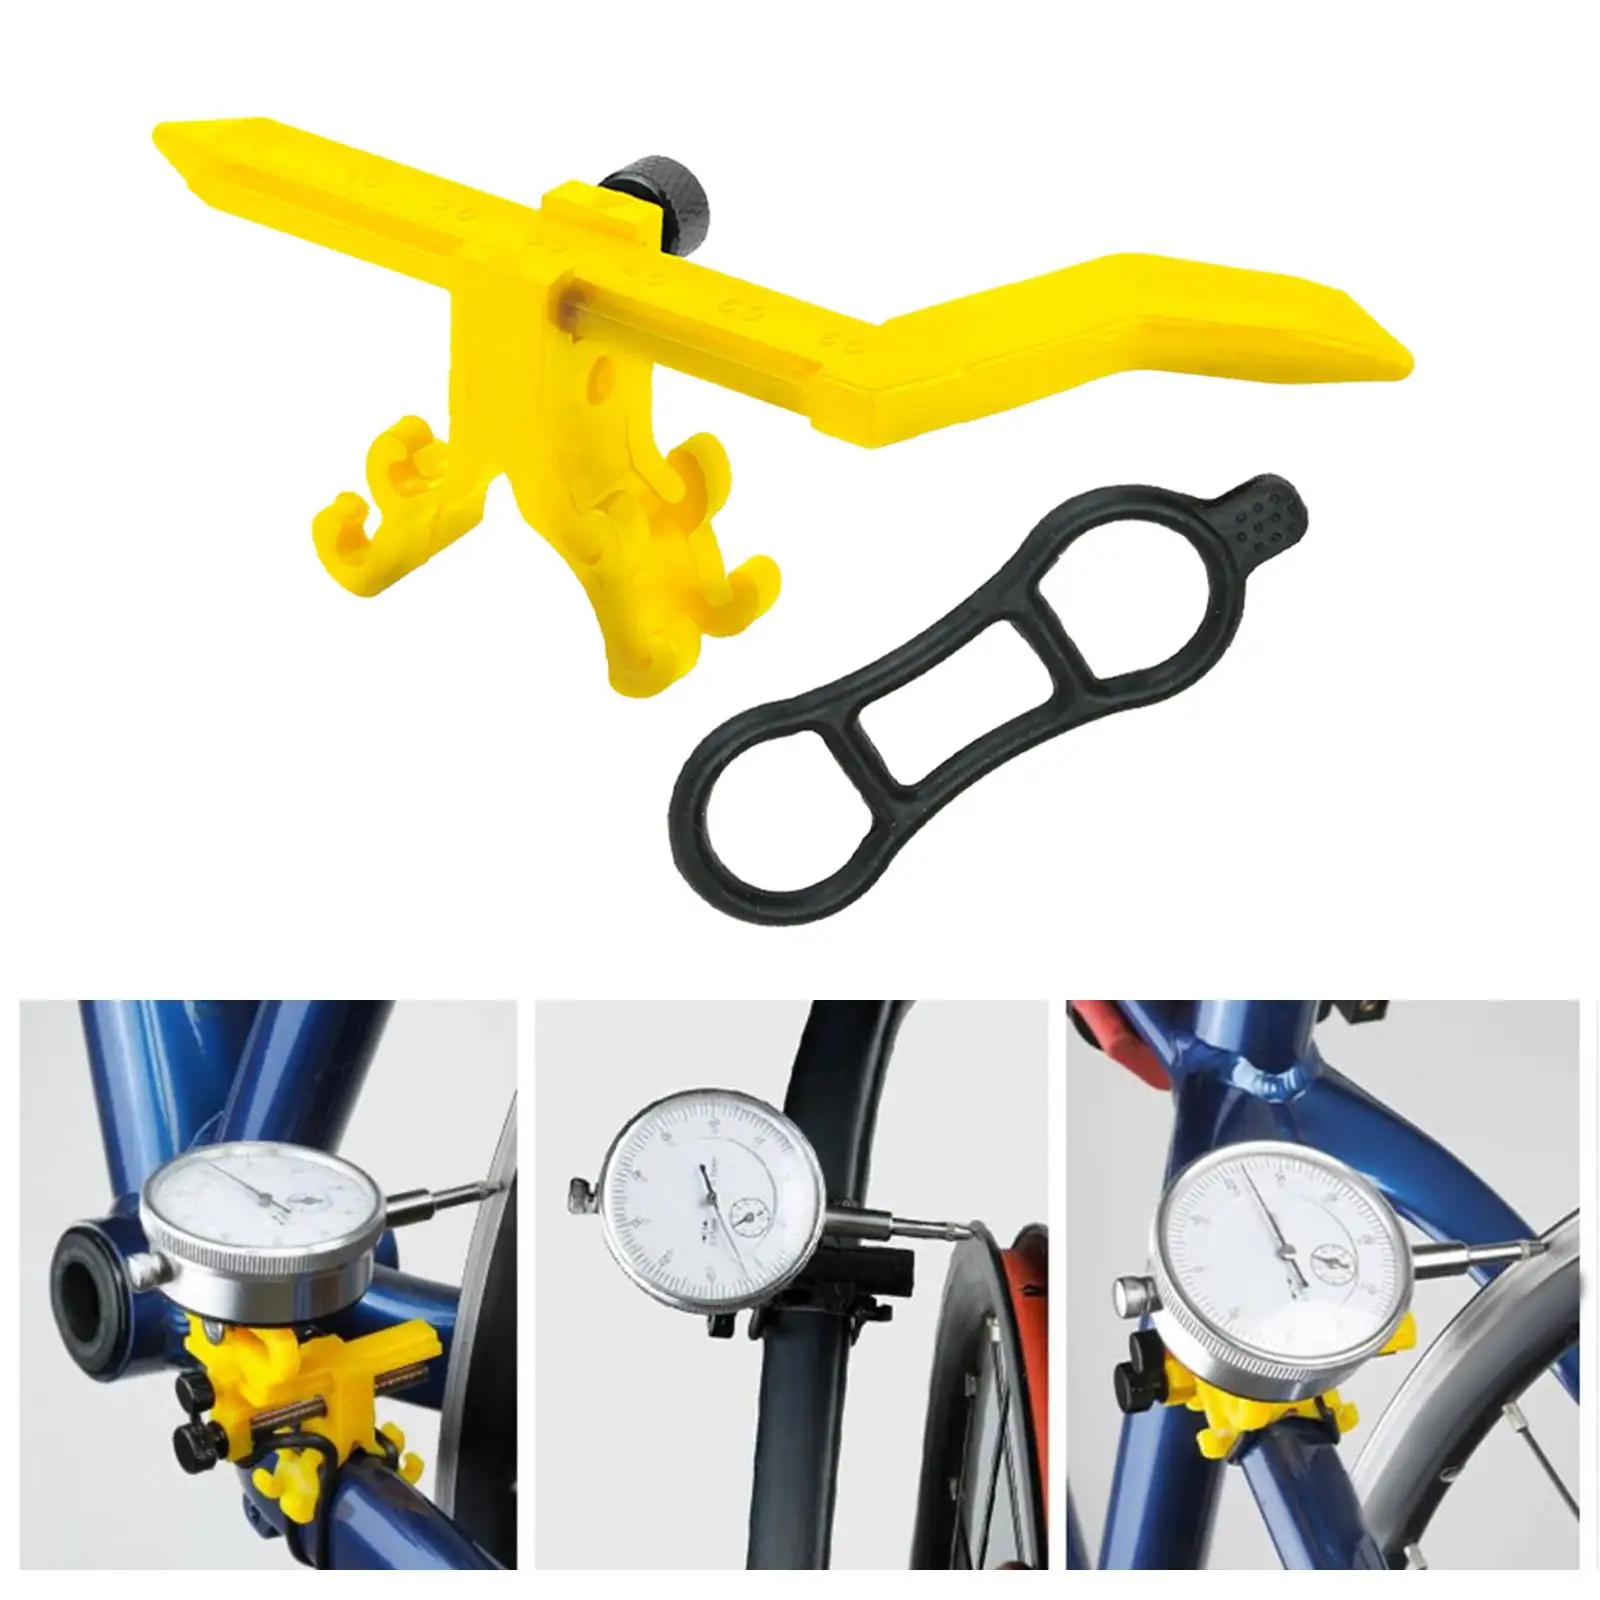 Mini Bike Wheel Truing Stand Removable Durable Bike Wheel Repair for Bicycle Road Bike Mountain Bike Riding Accessories 